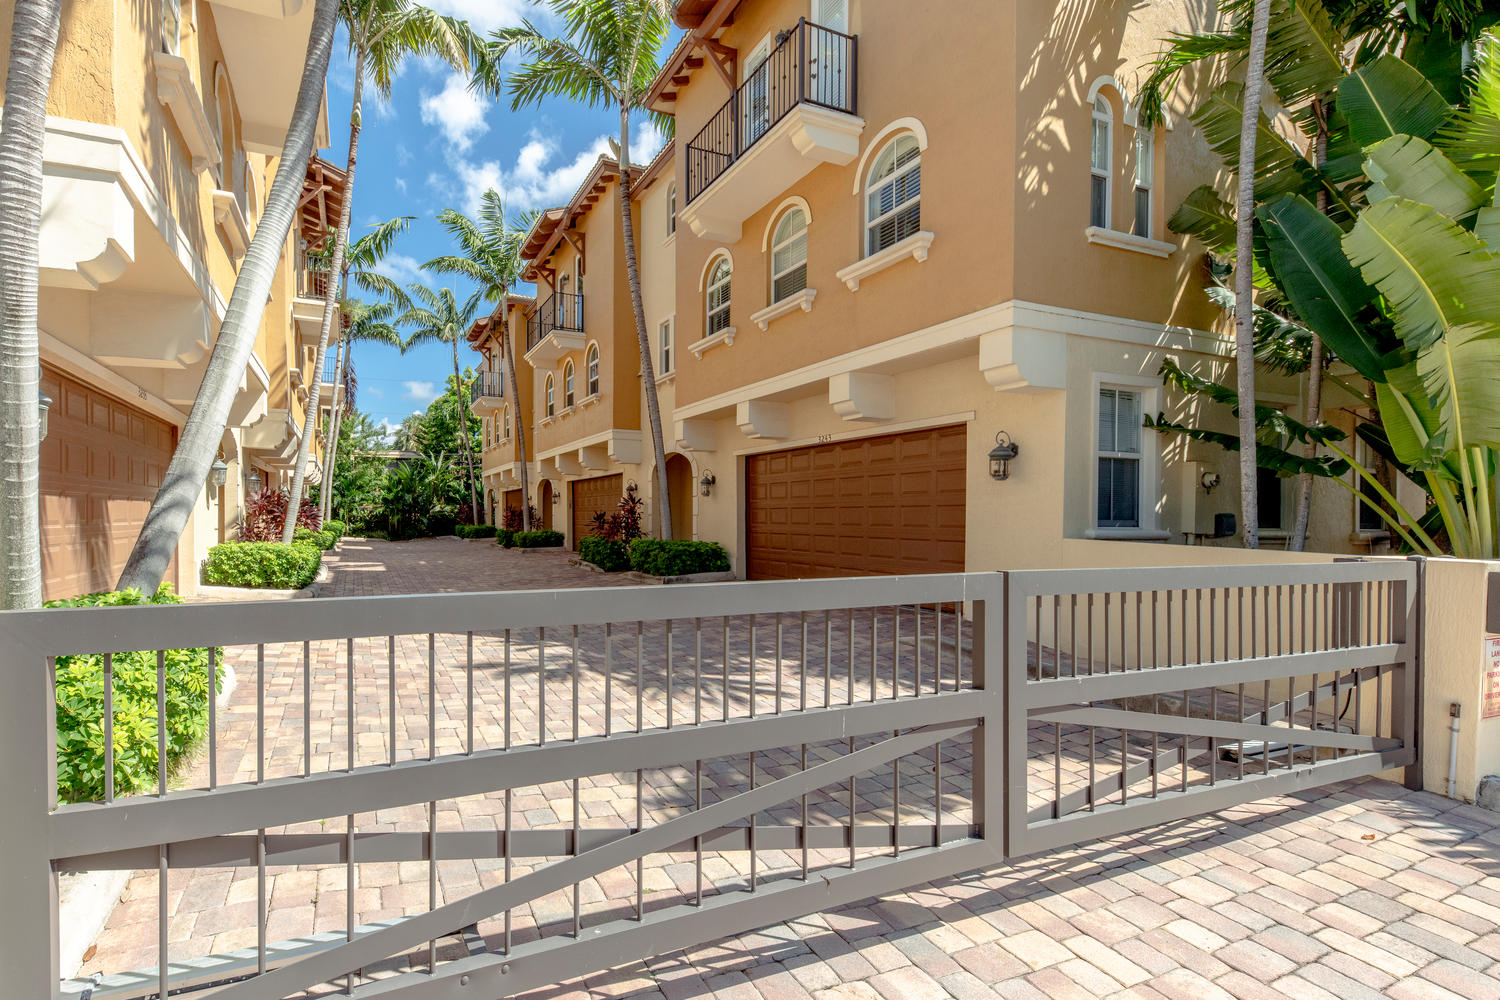 3239 NE 13th Street Pompano Beach FL 33062 - Real Estate Broker